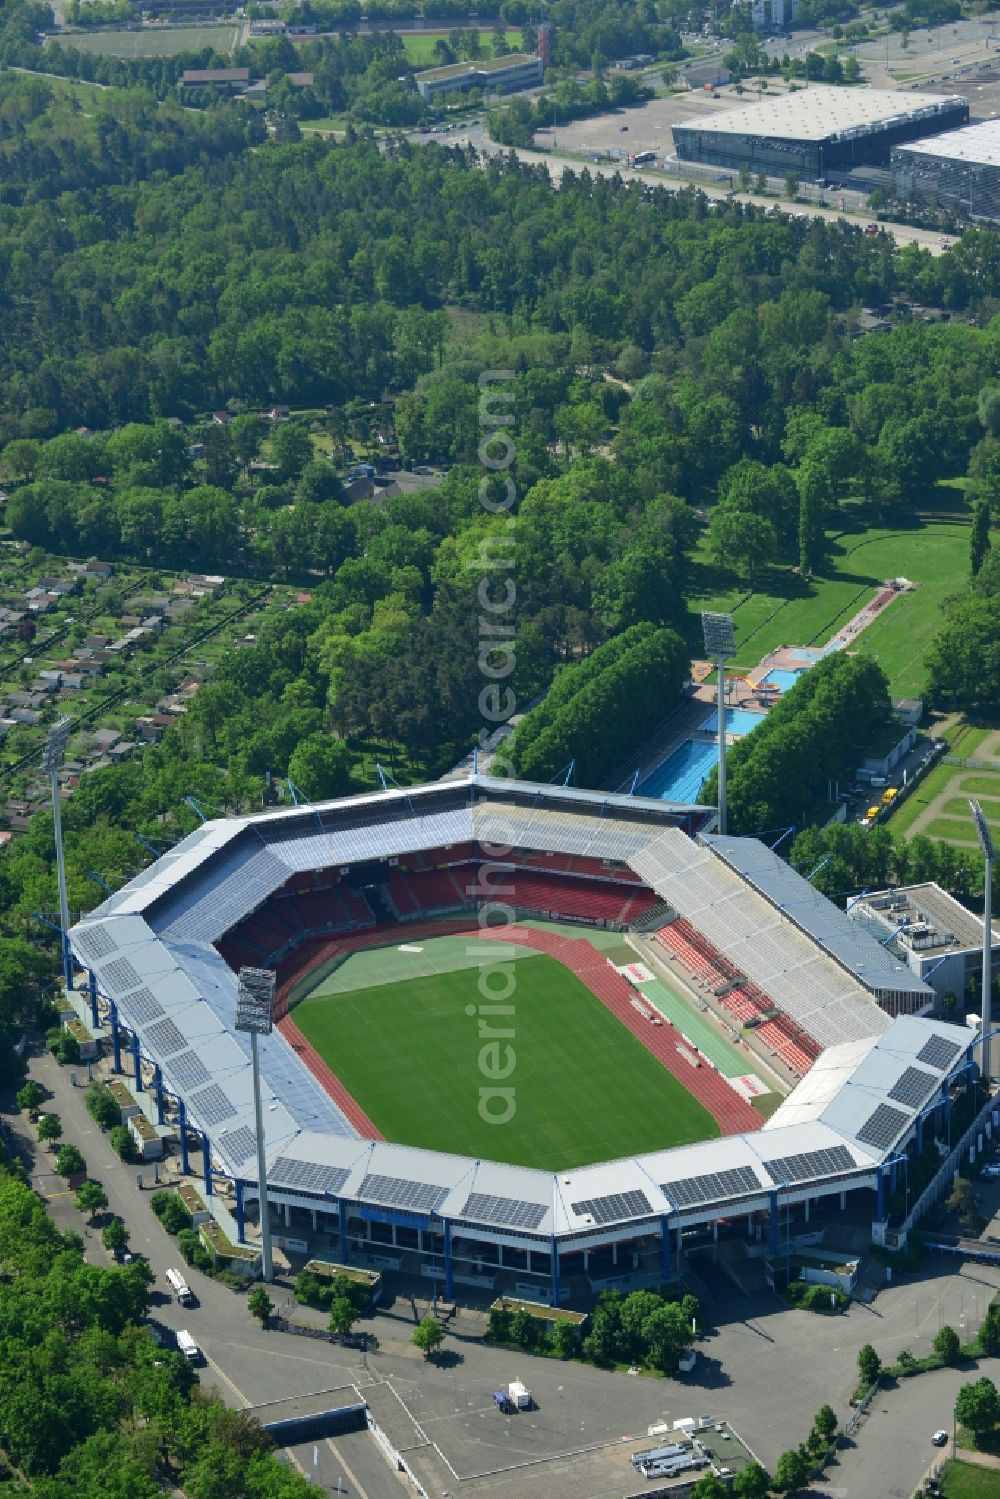 Nürnberg from above - Grounds at Grundig Stadium (formerly known as EasyCredit Stadium or Franken-Stadion) in Nuremberg in Bavaria